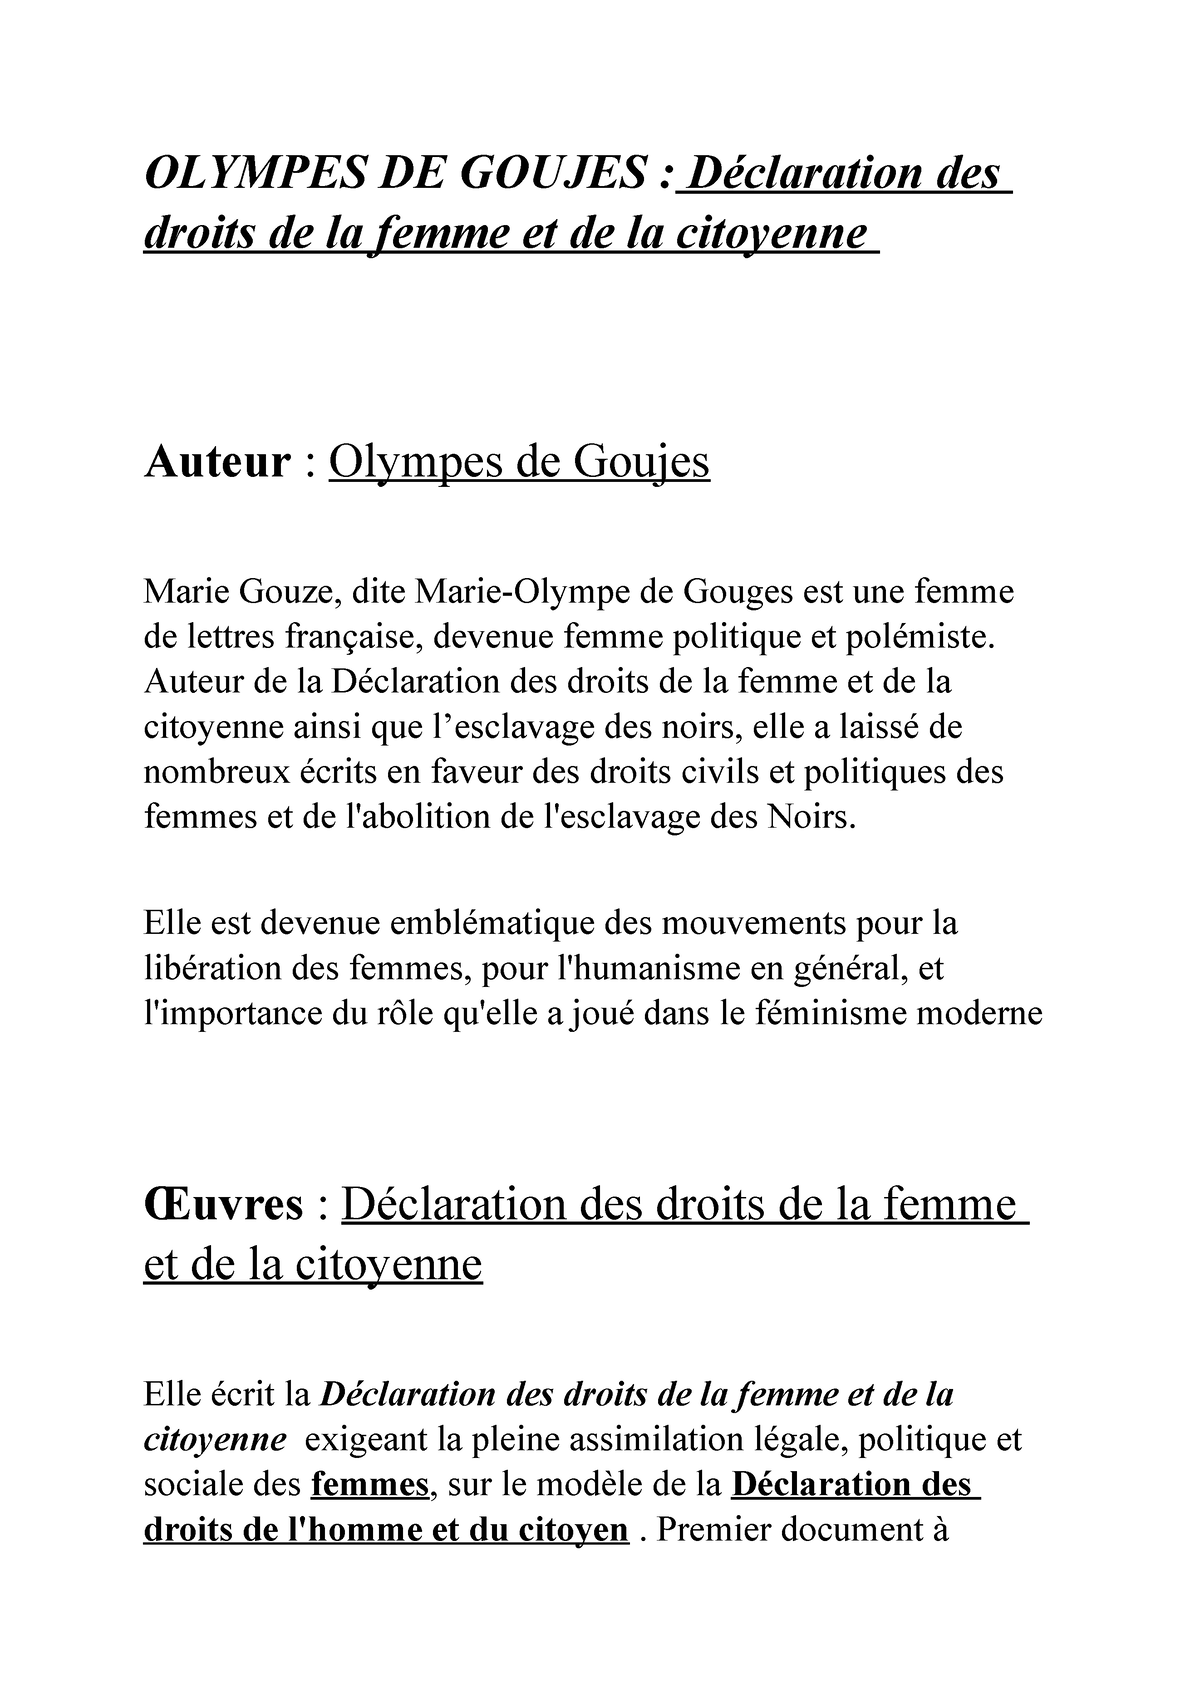 citation ddfc olympe de gouges dissertation